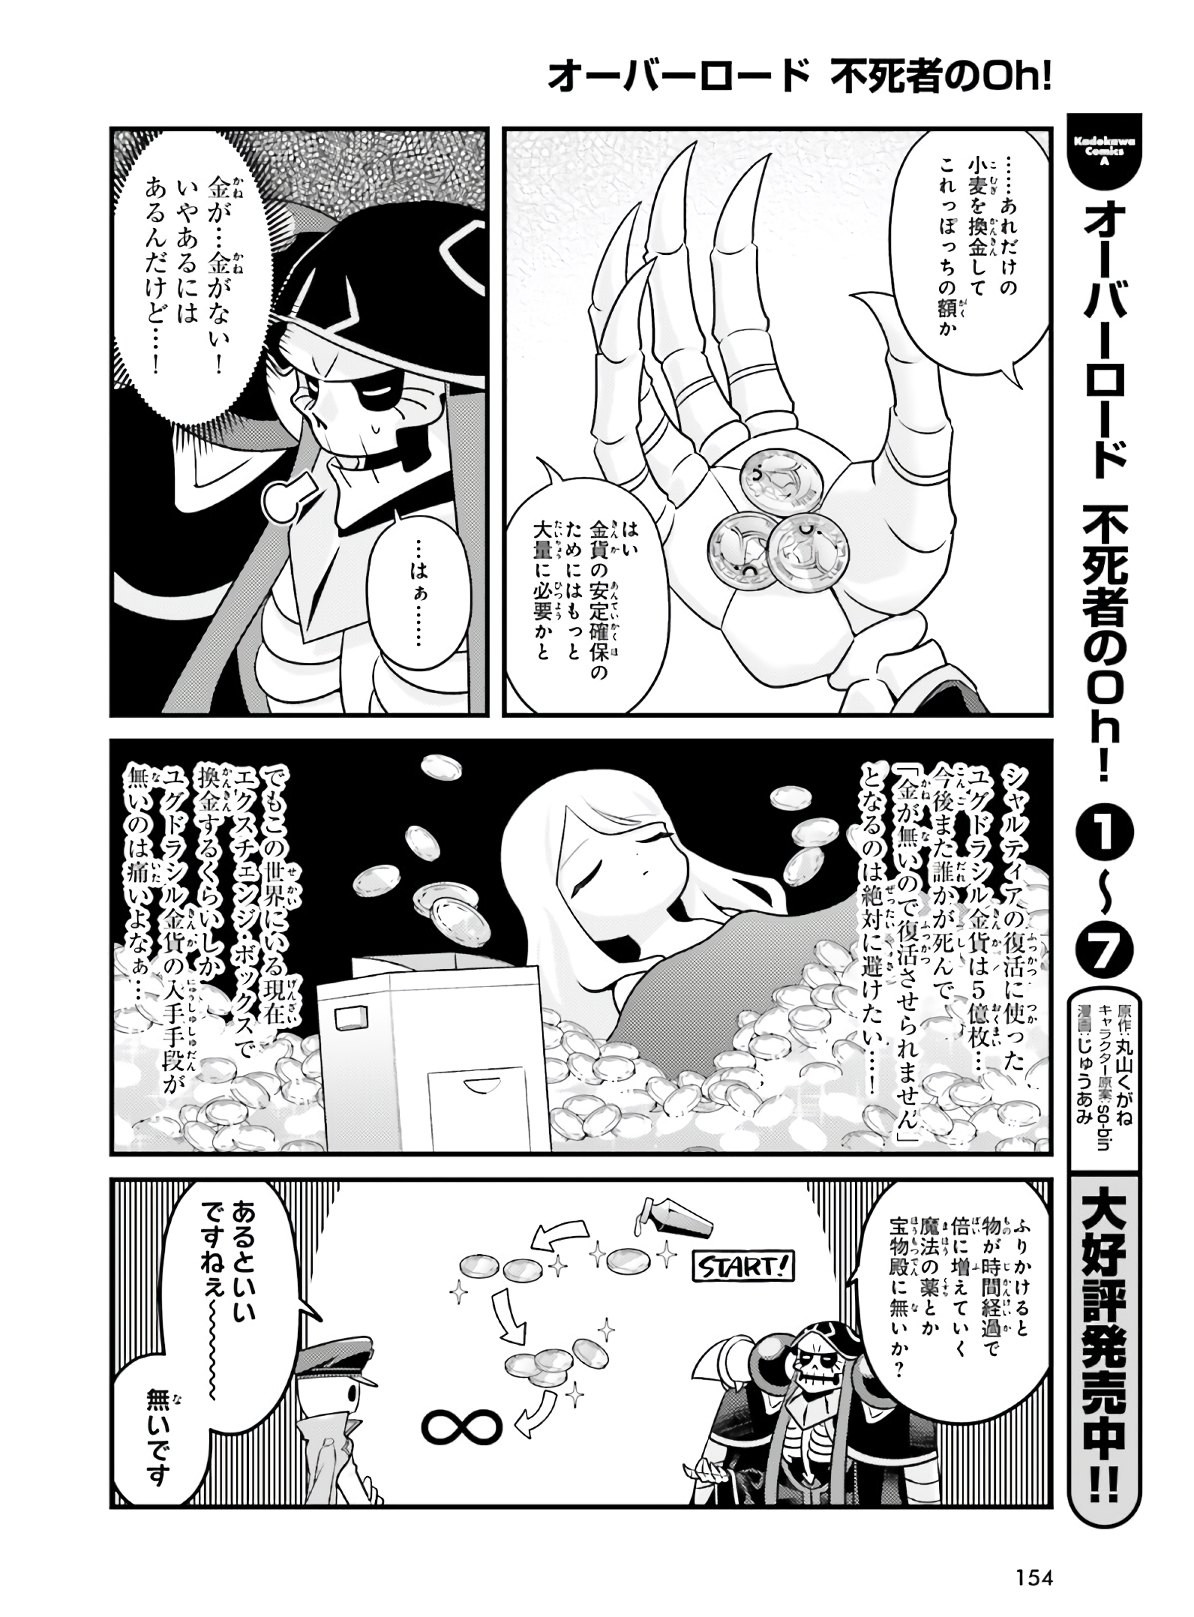 Overlord-Fushisha-no-Oh - Chapter 44 - Page 2